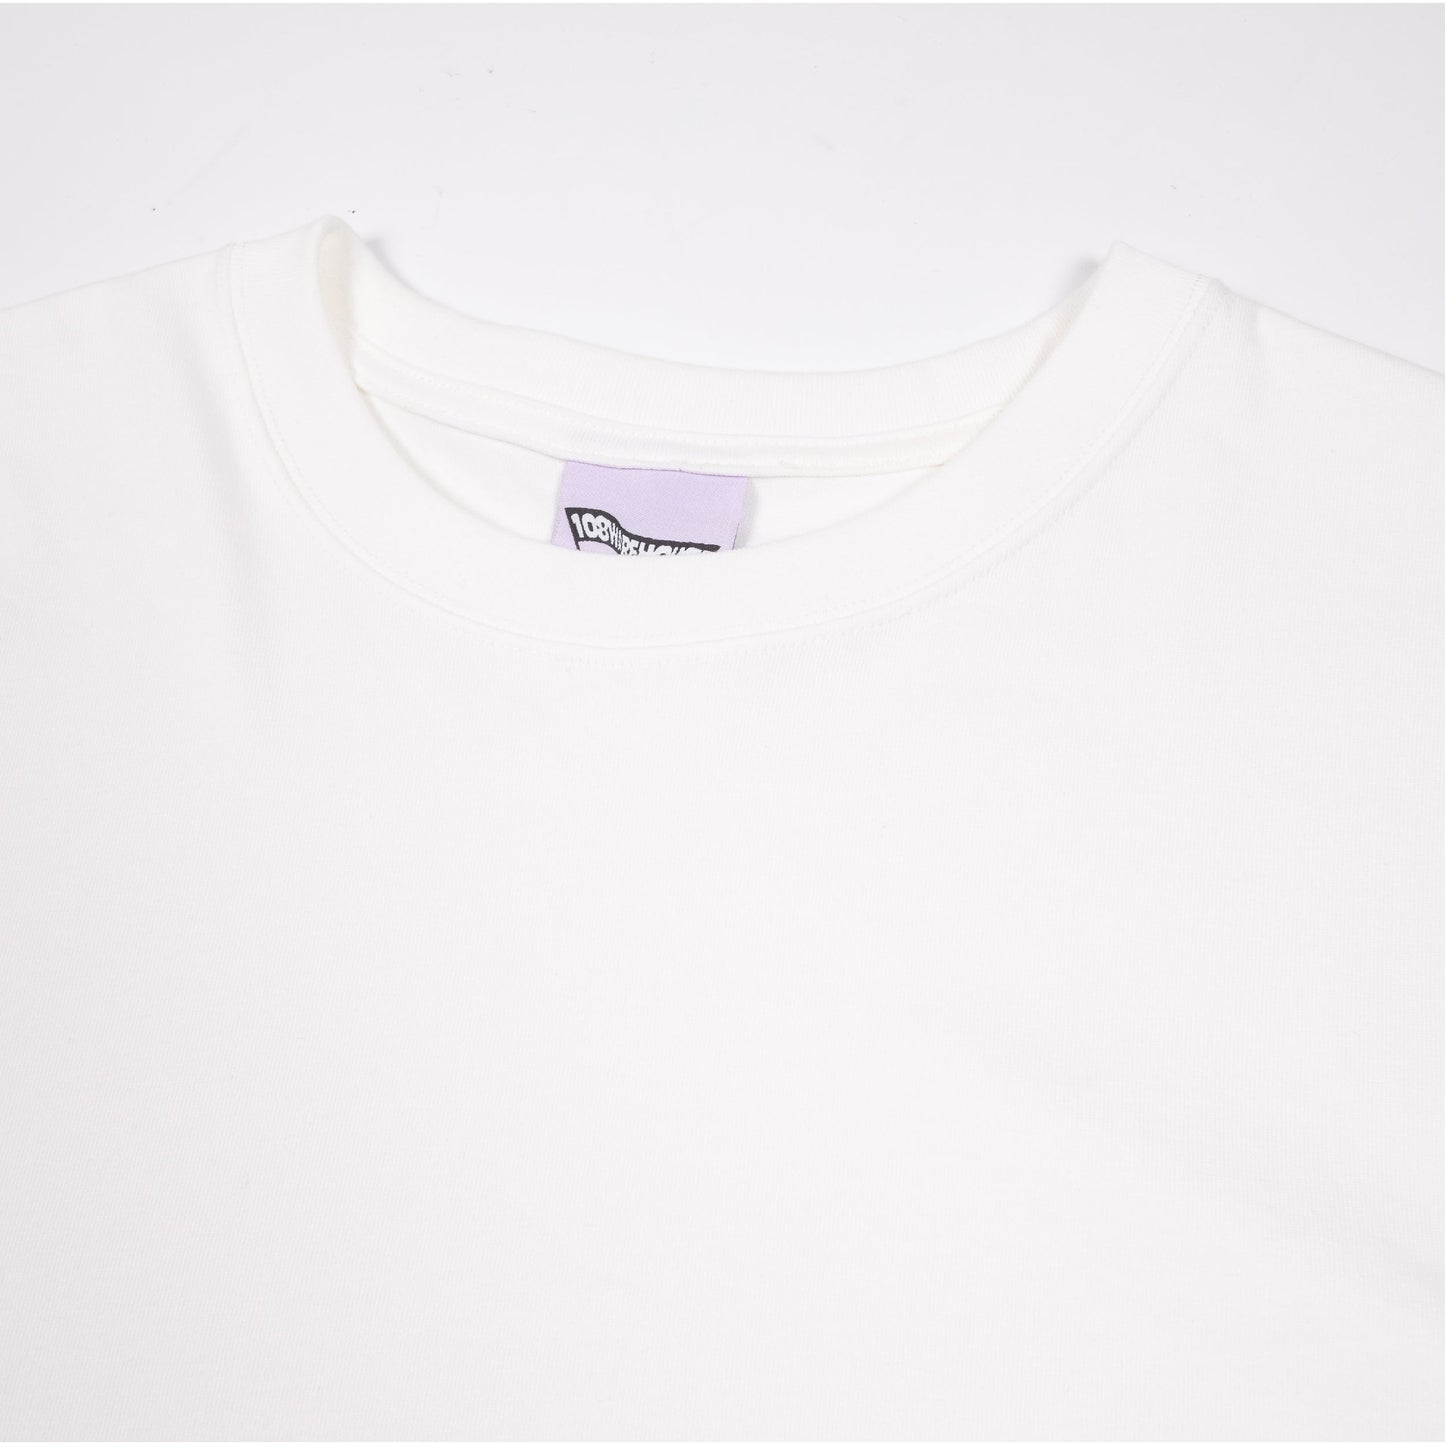 108Warehouse 2 Pack Blank T-Shirt (Mixed)